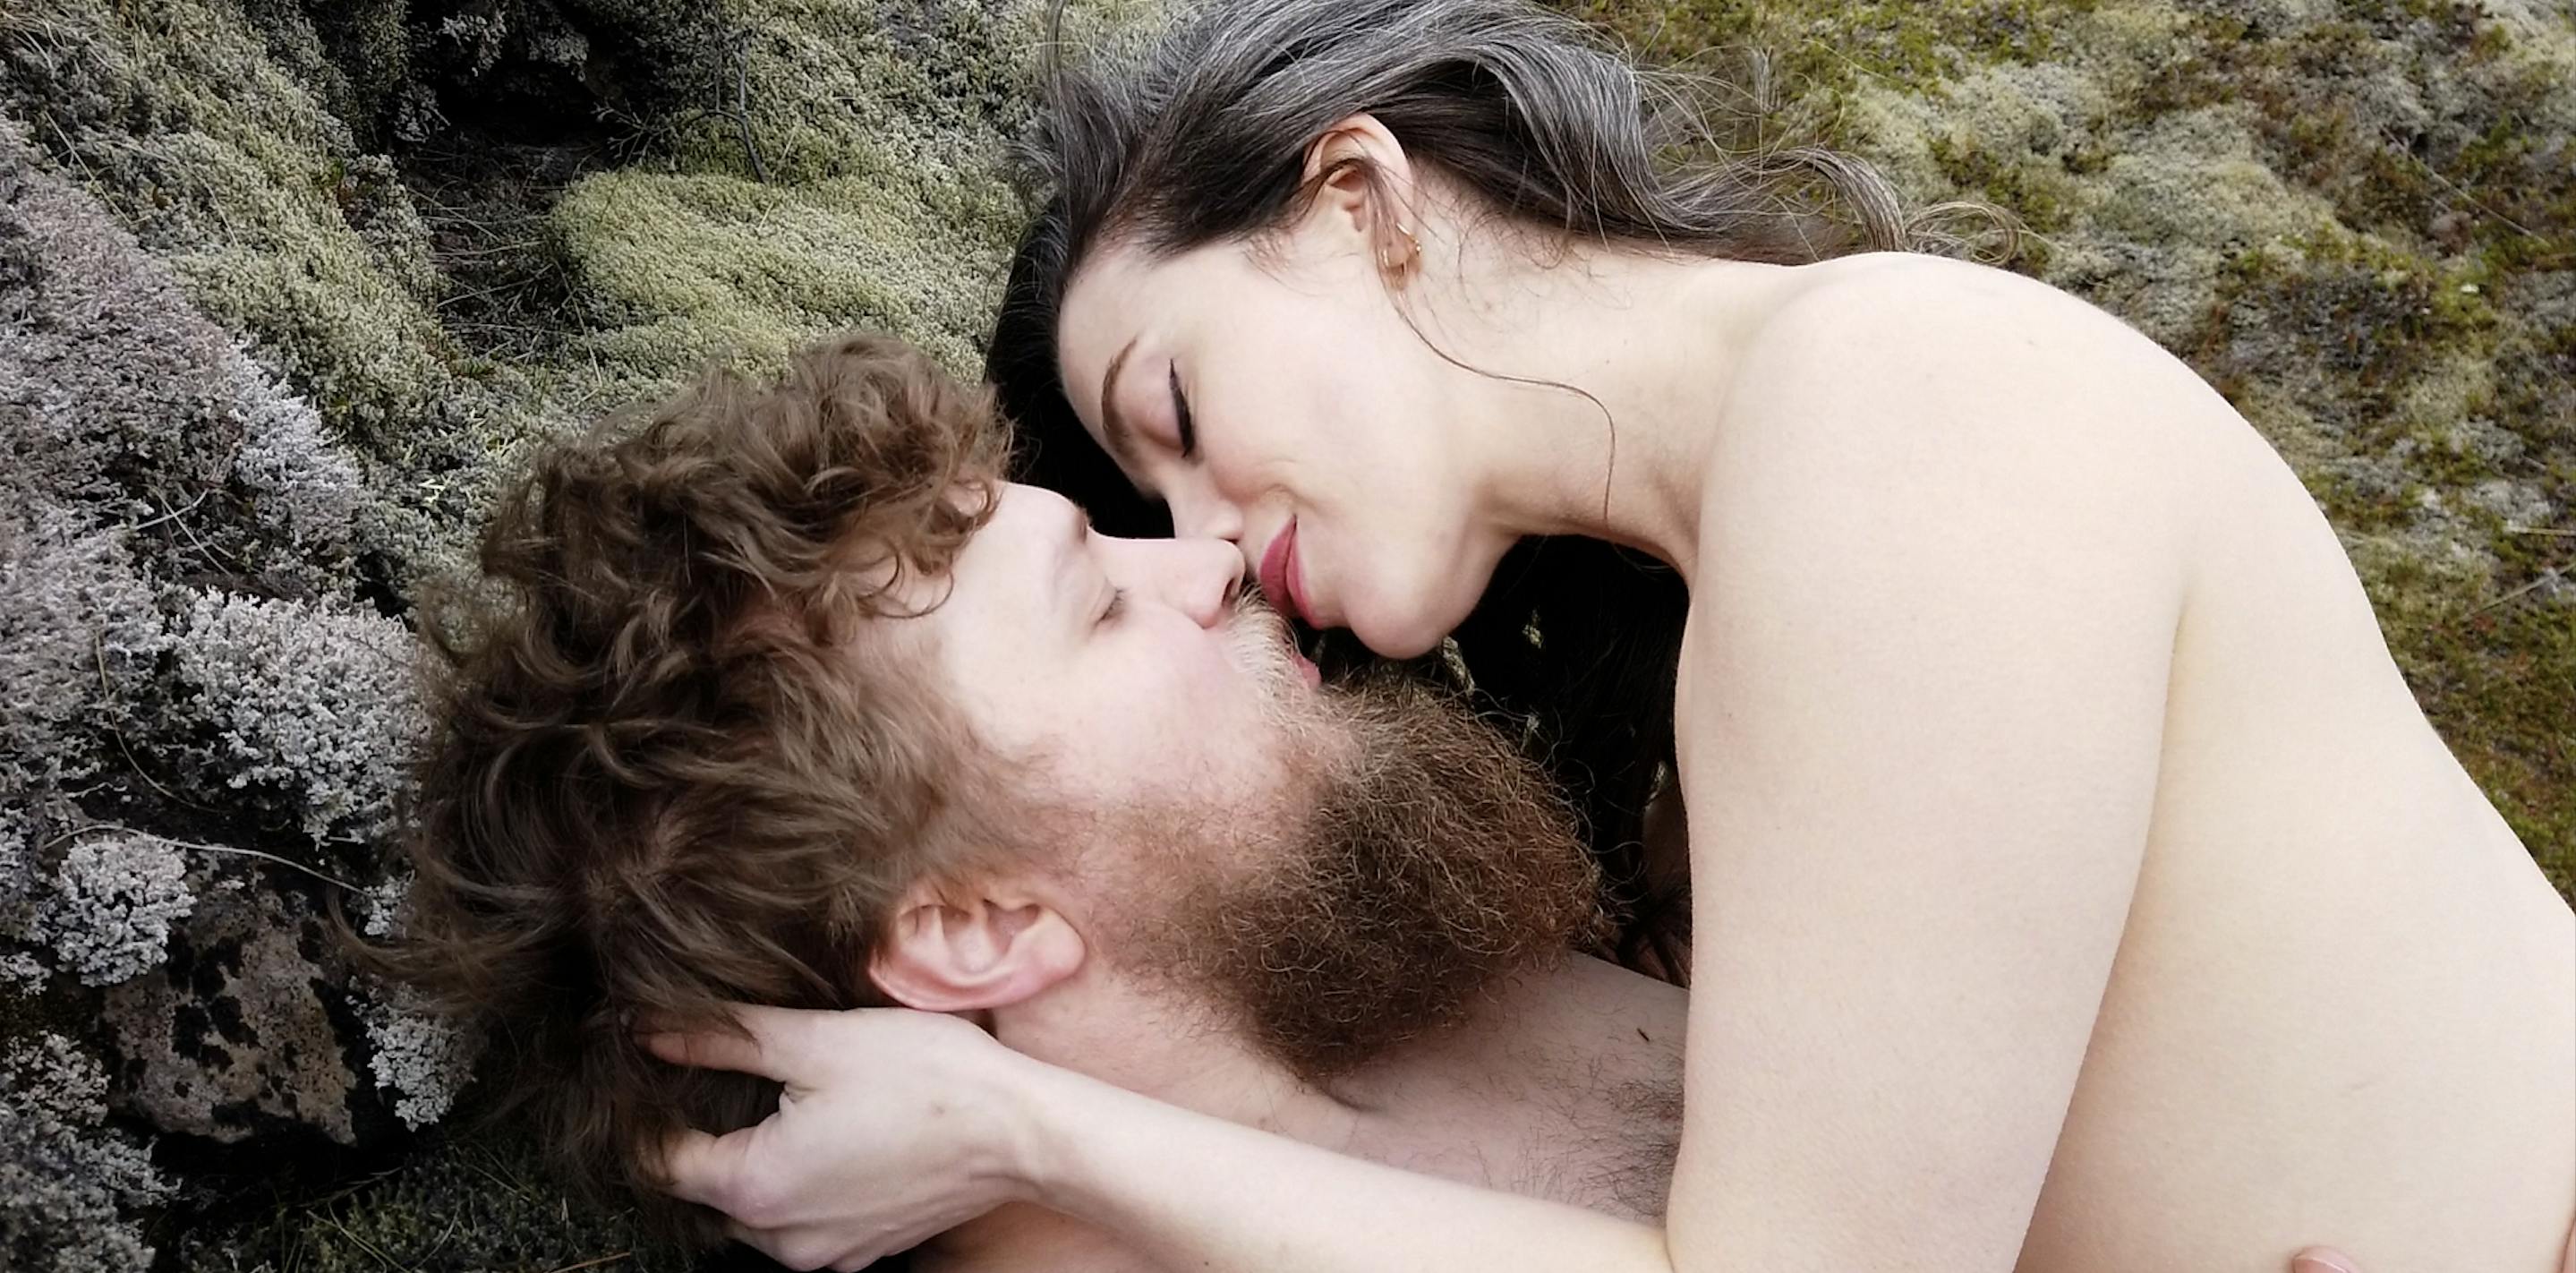 Trailer Corwin & Nicole: Nude Photography in Iceland